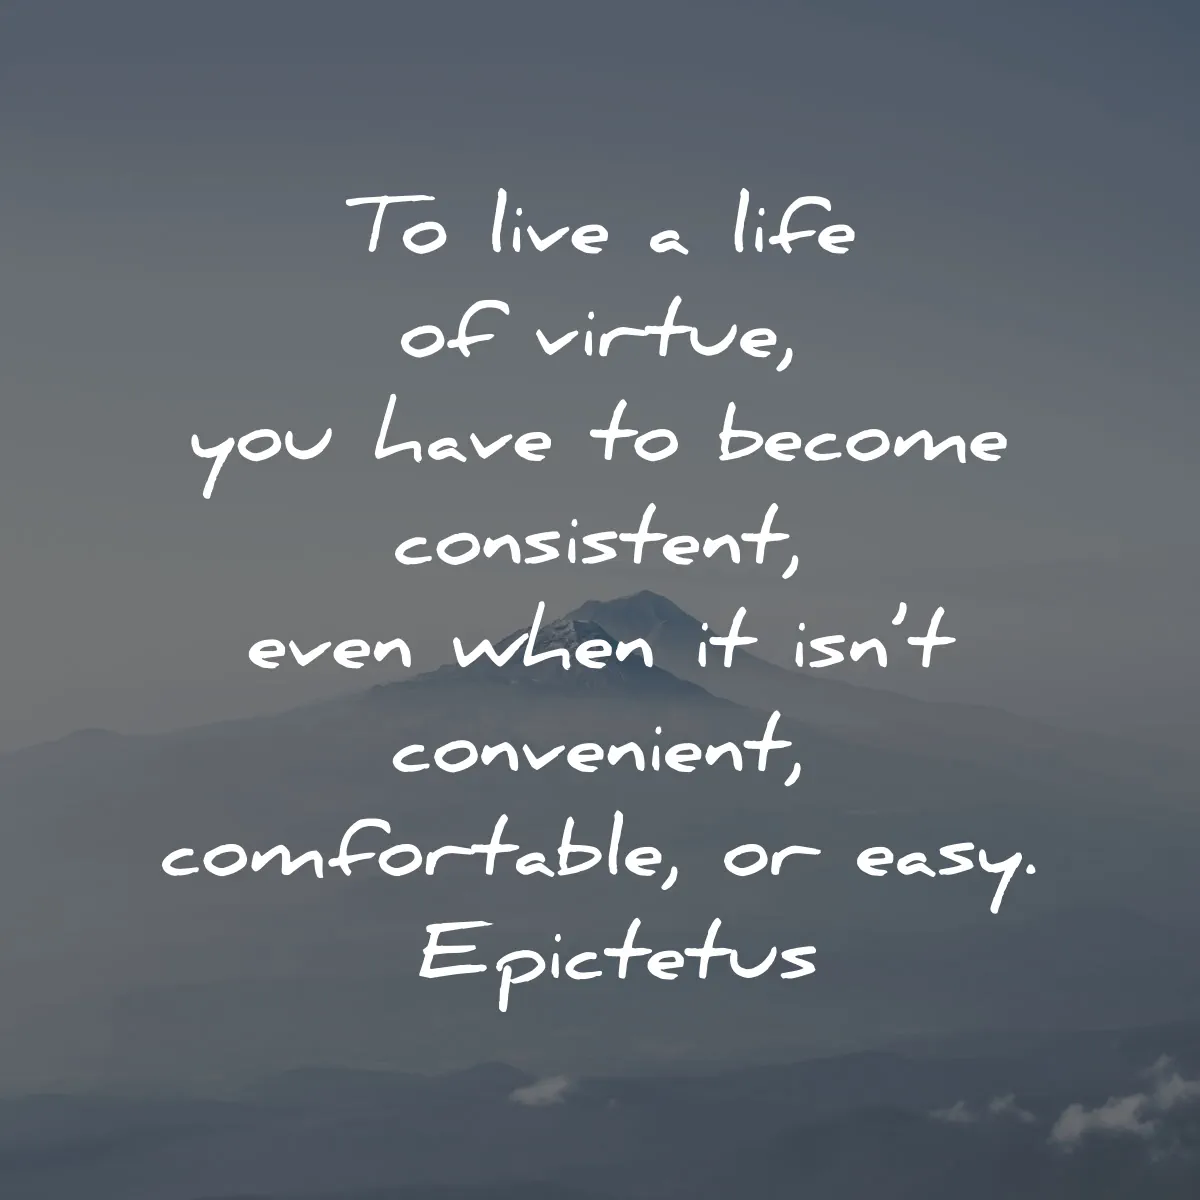 epictetus quotes live life virtue become consistent wisdom